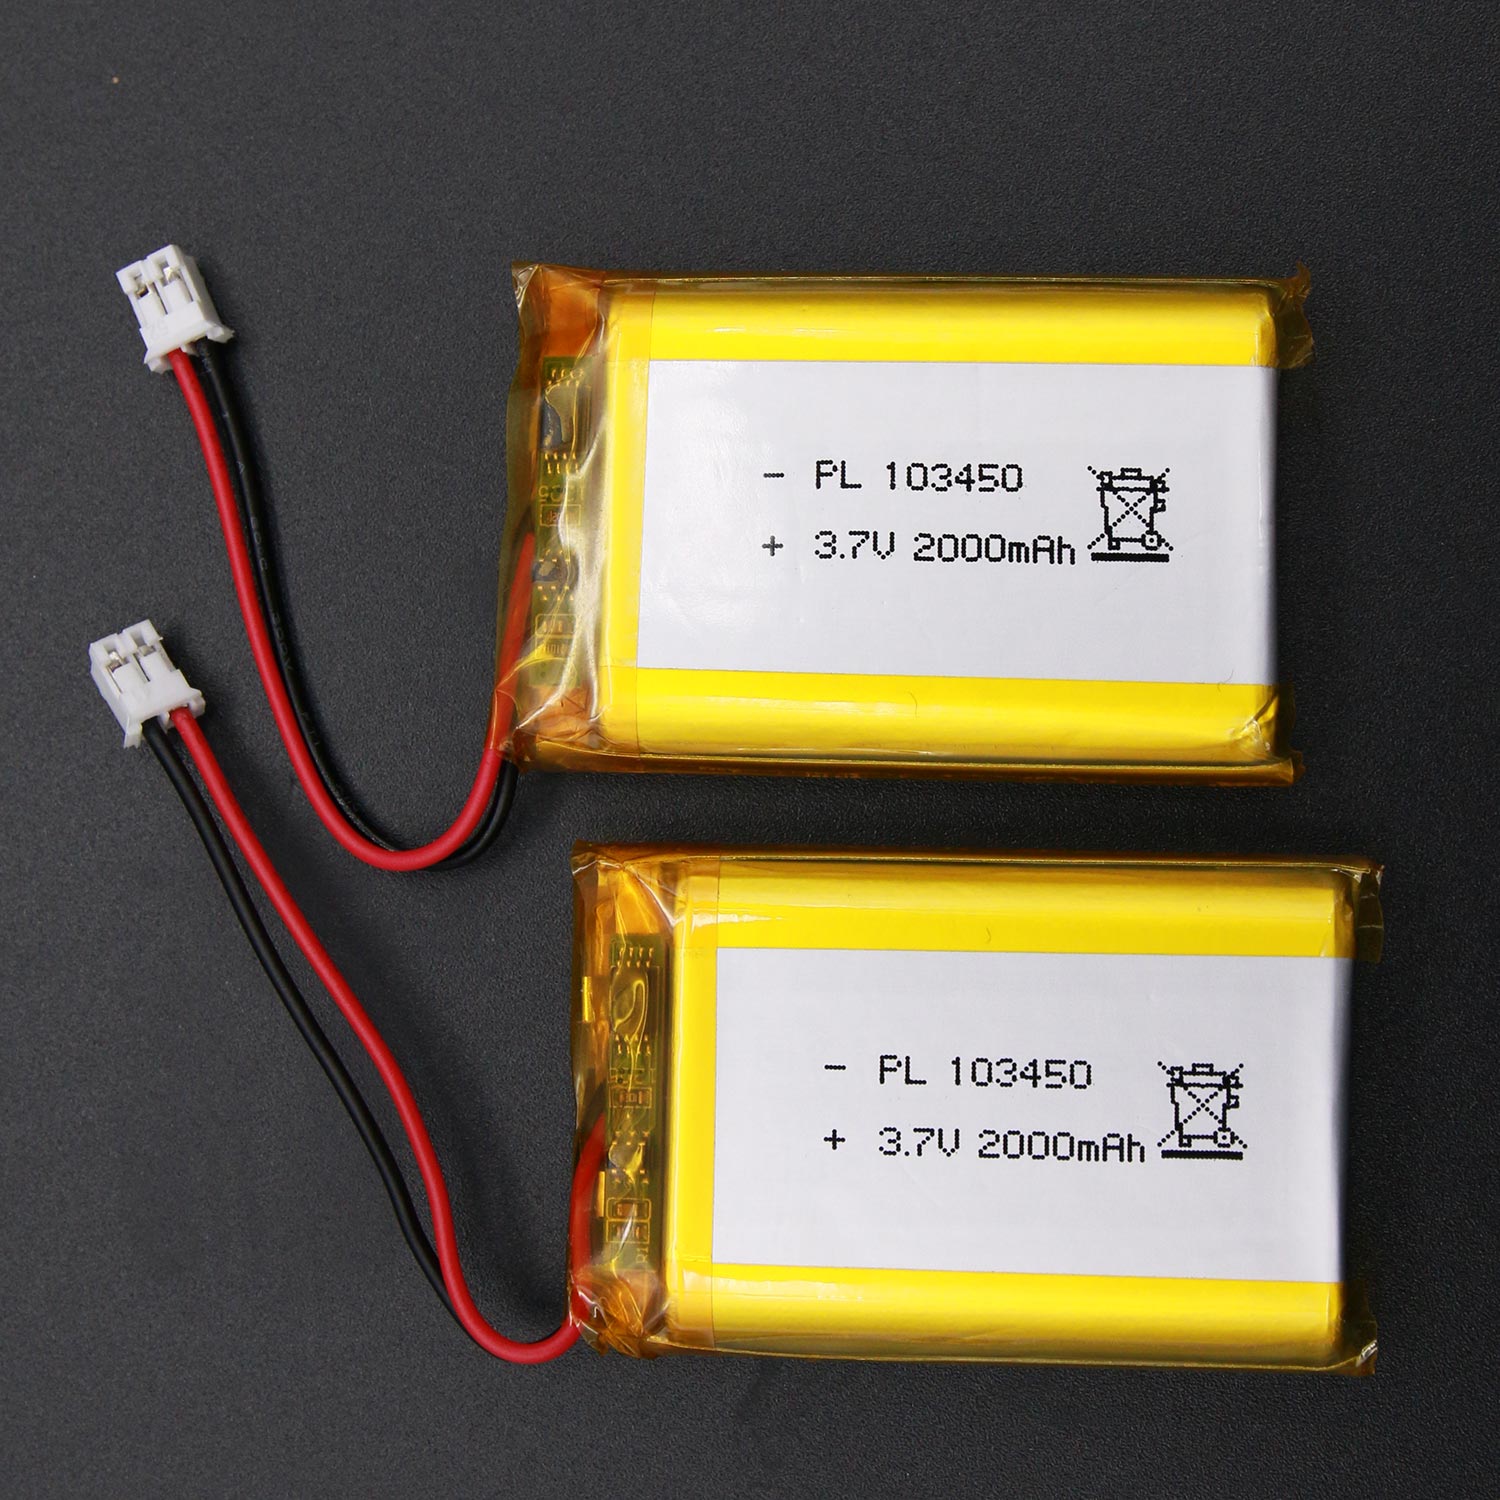 3.7V 2000mAh 103450 Lithium Polymer Battery